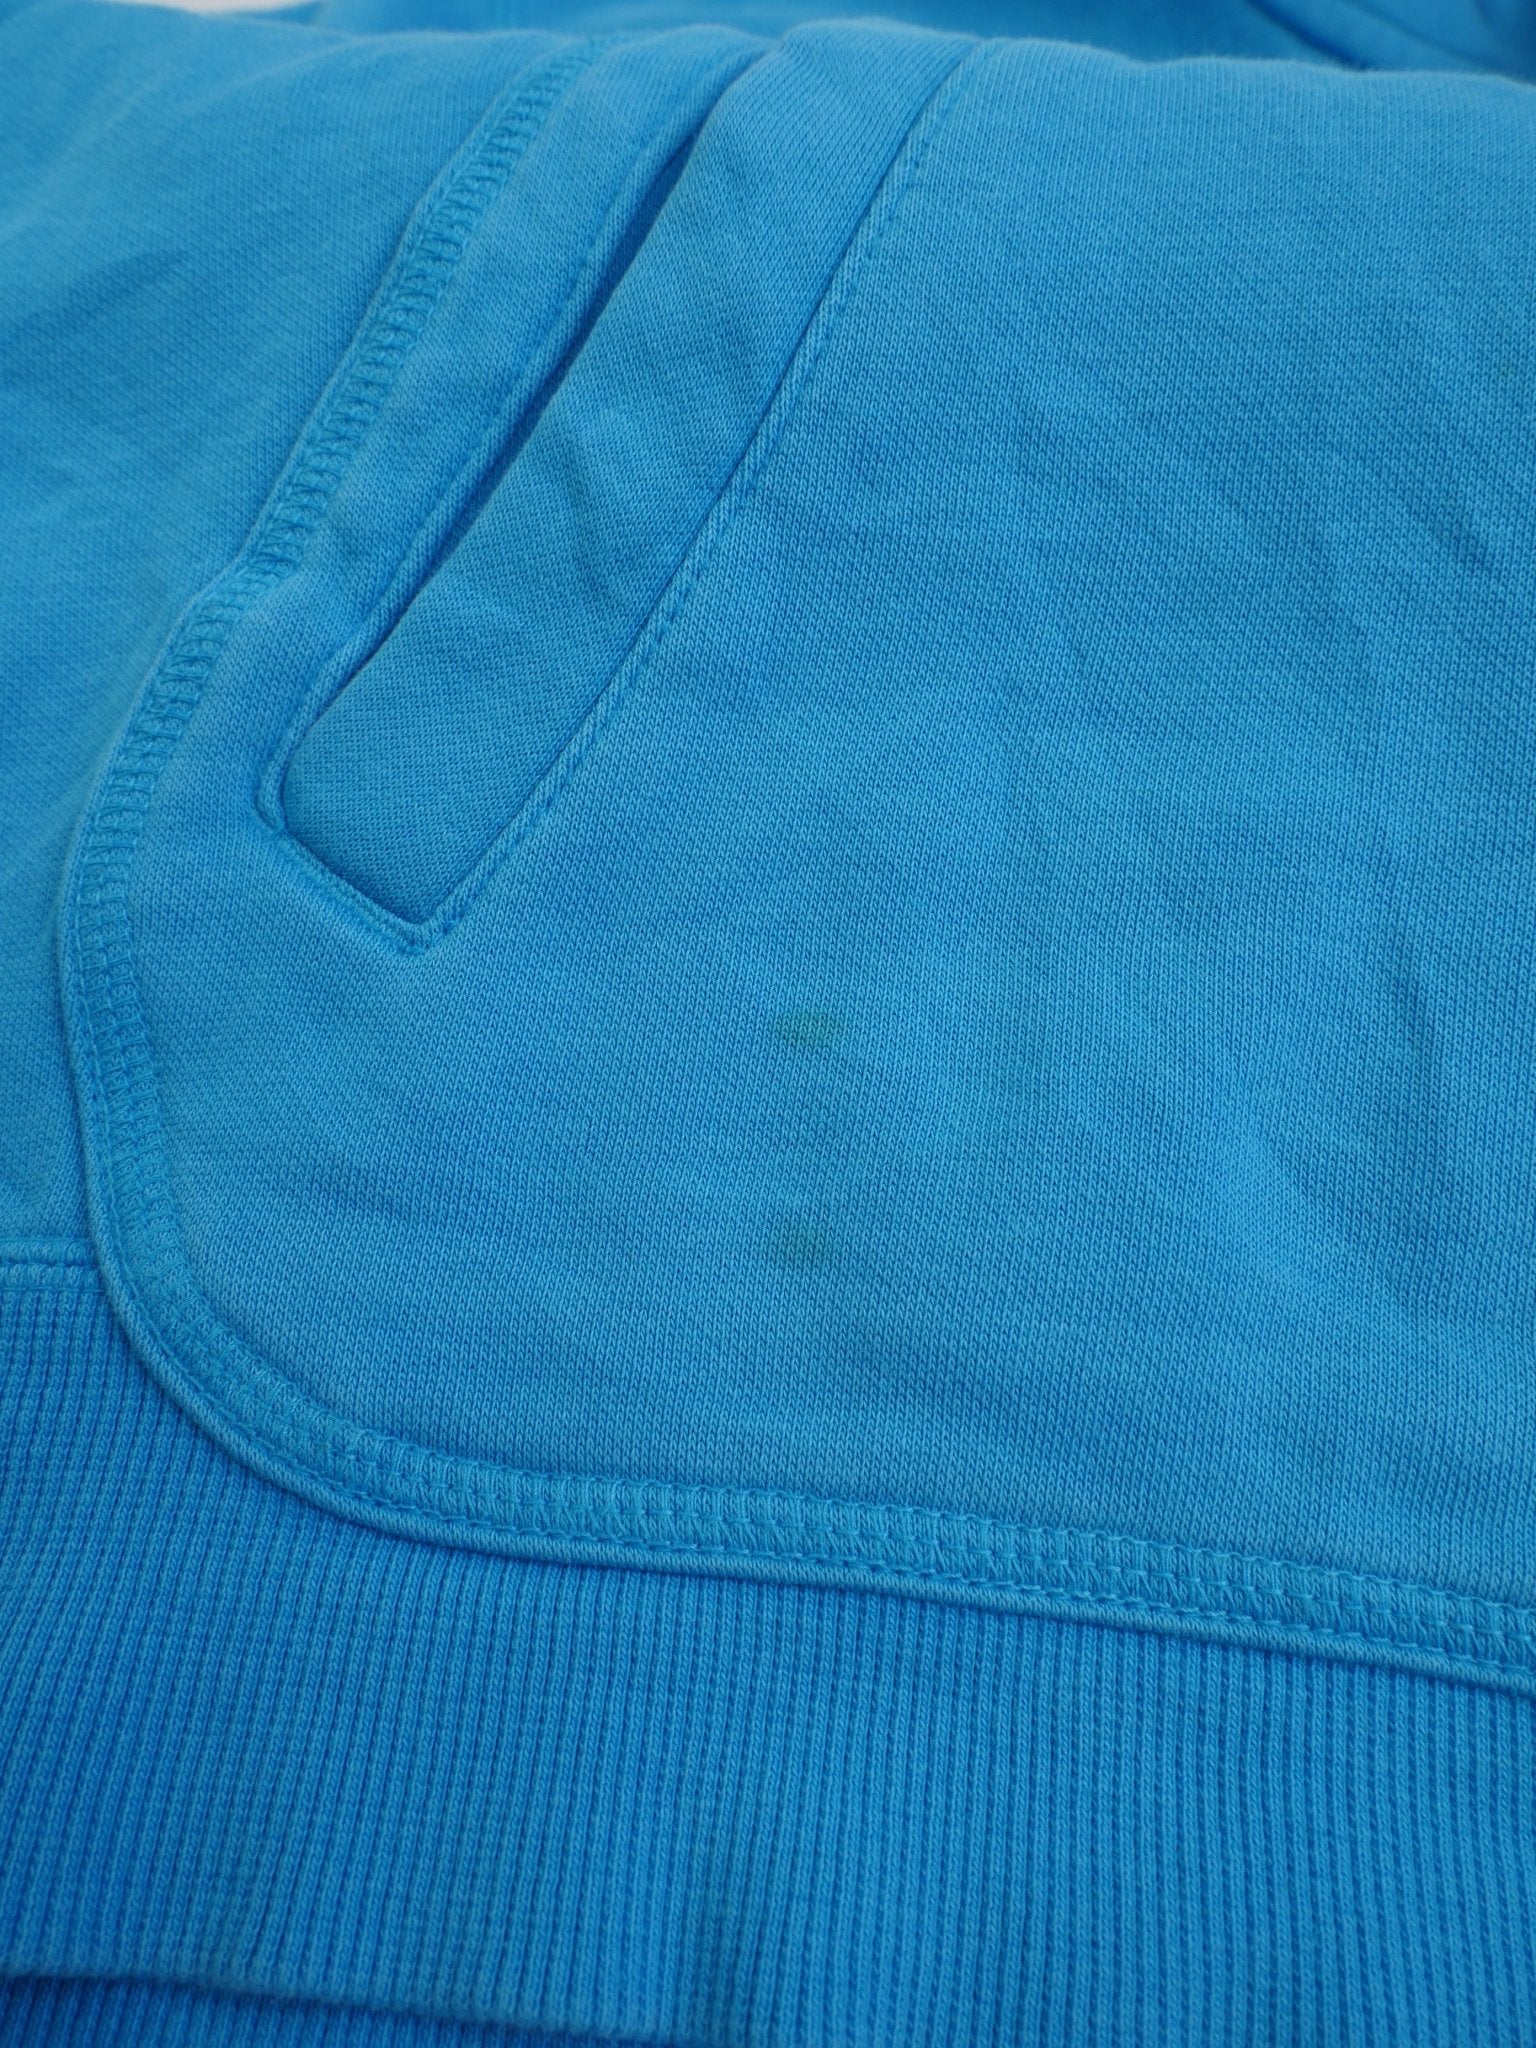 puma printed Logo turquoise Zip Hoodie - Peeces